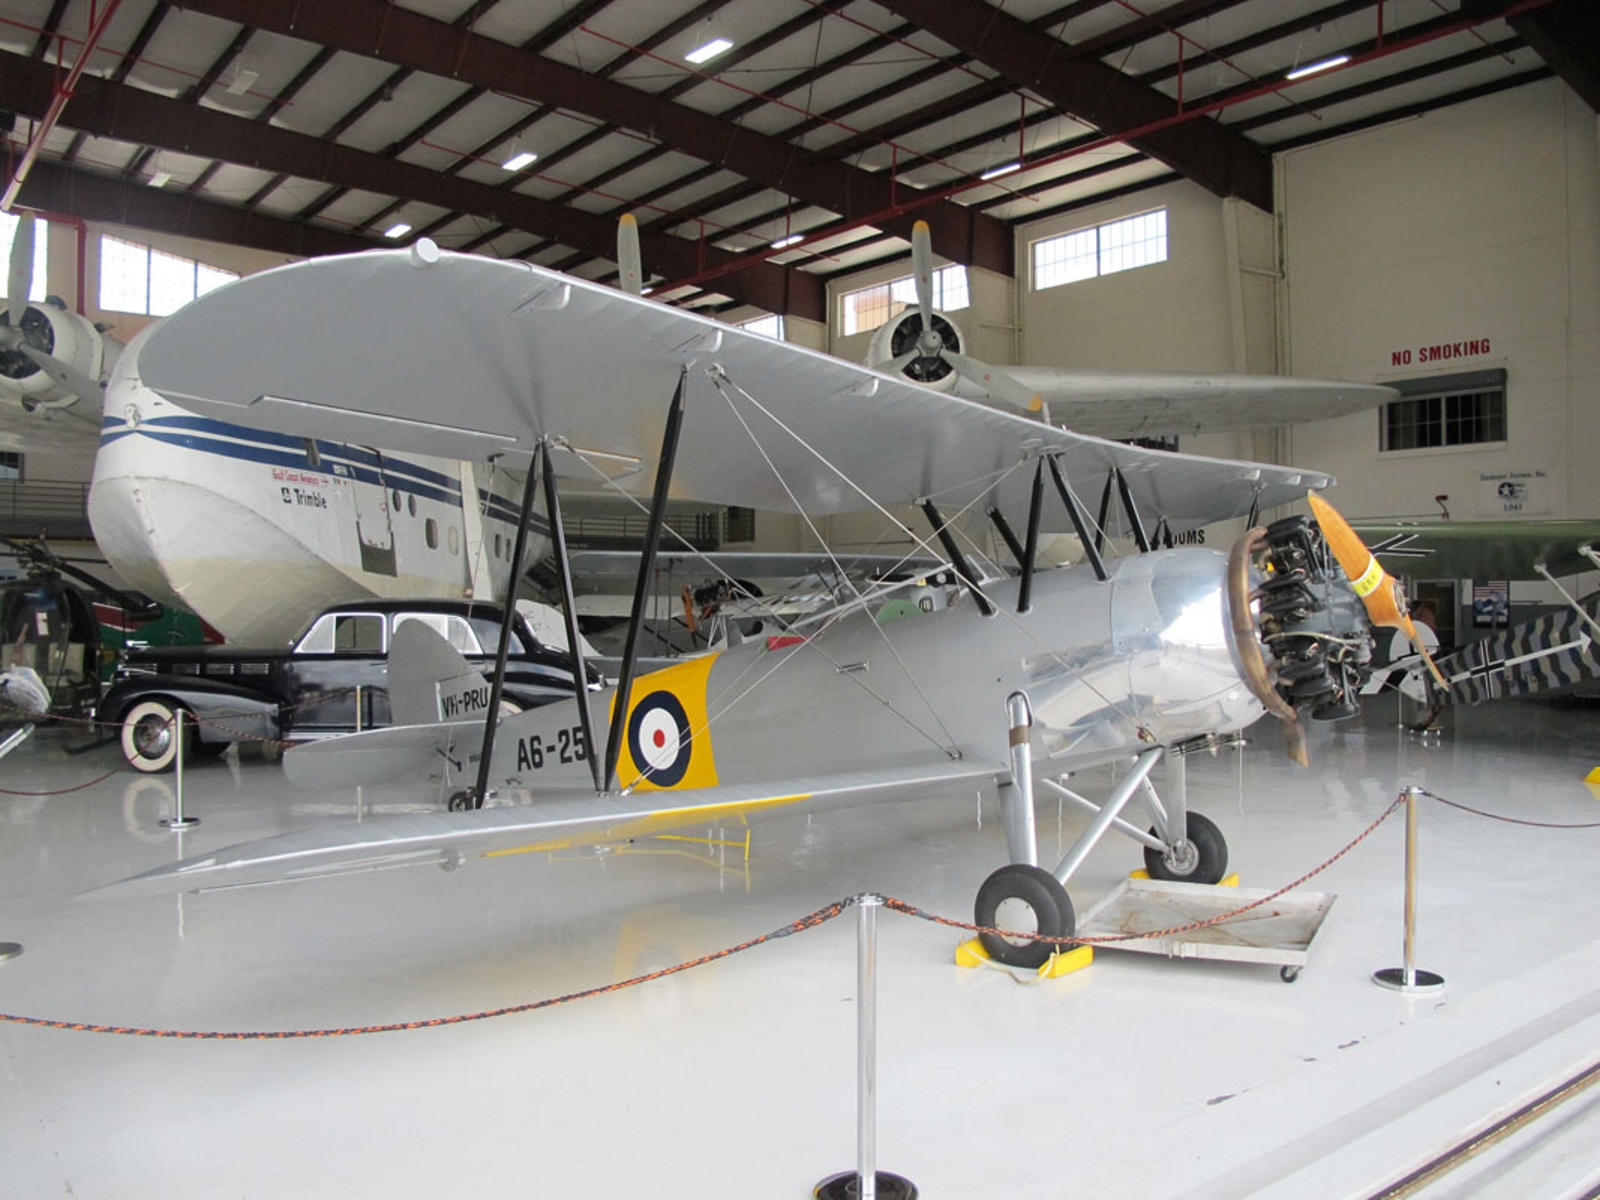 Avro 643 Mk.II Cadet